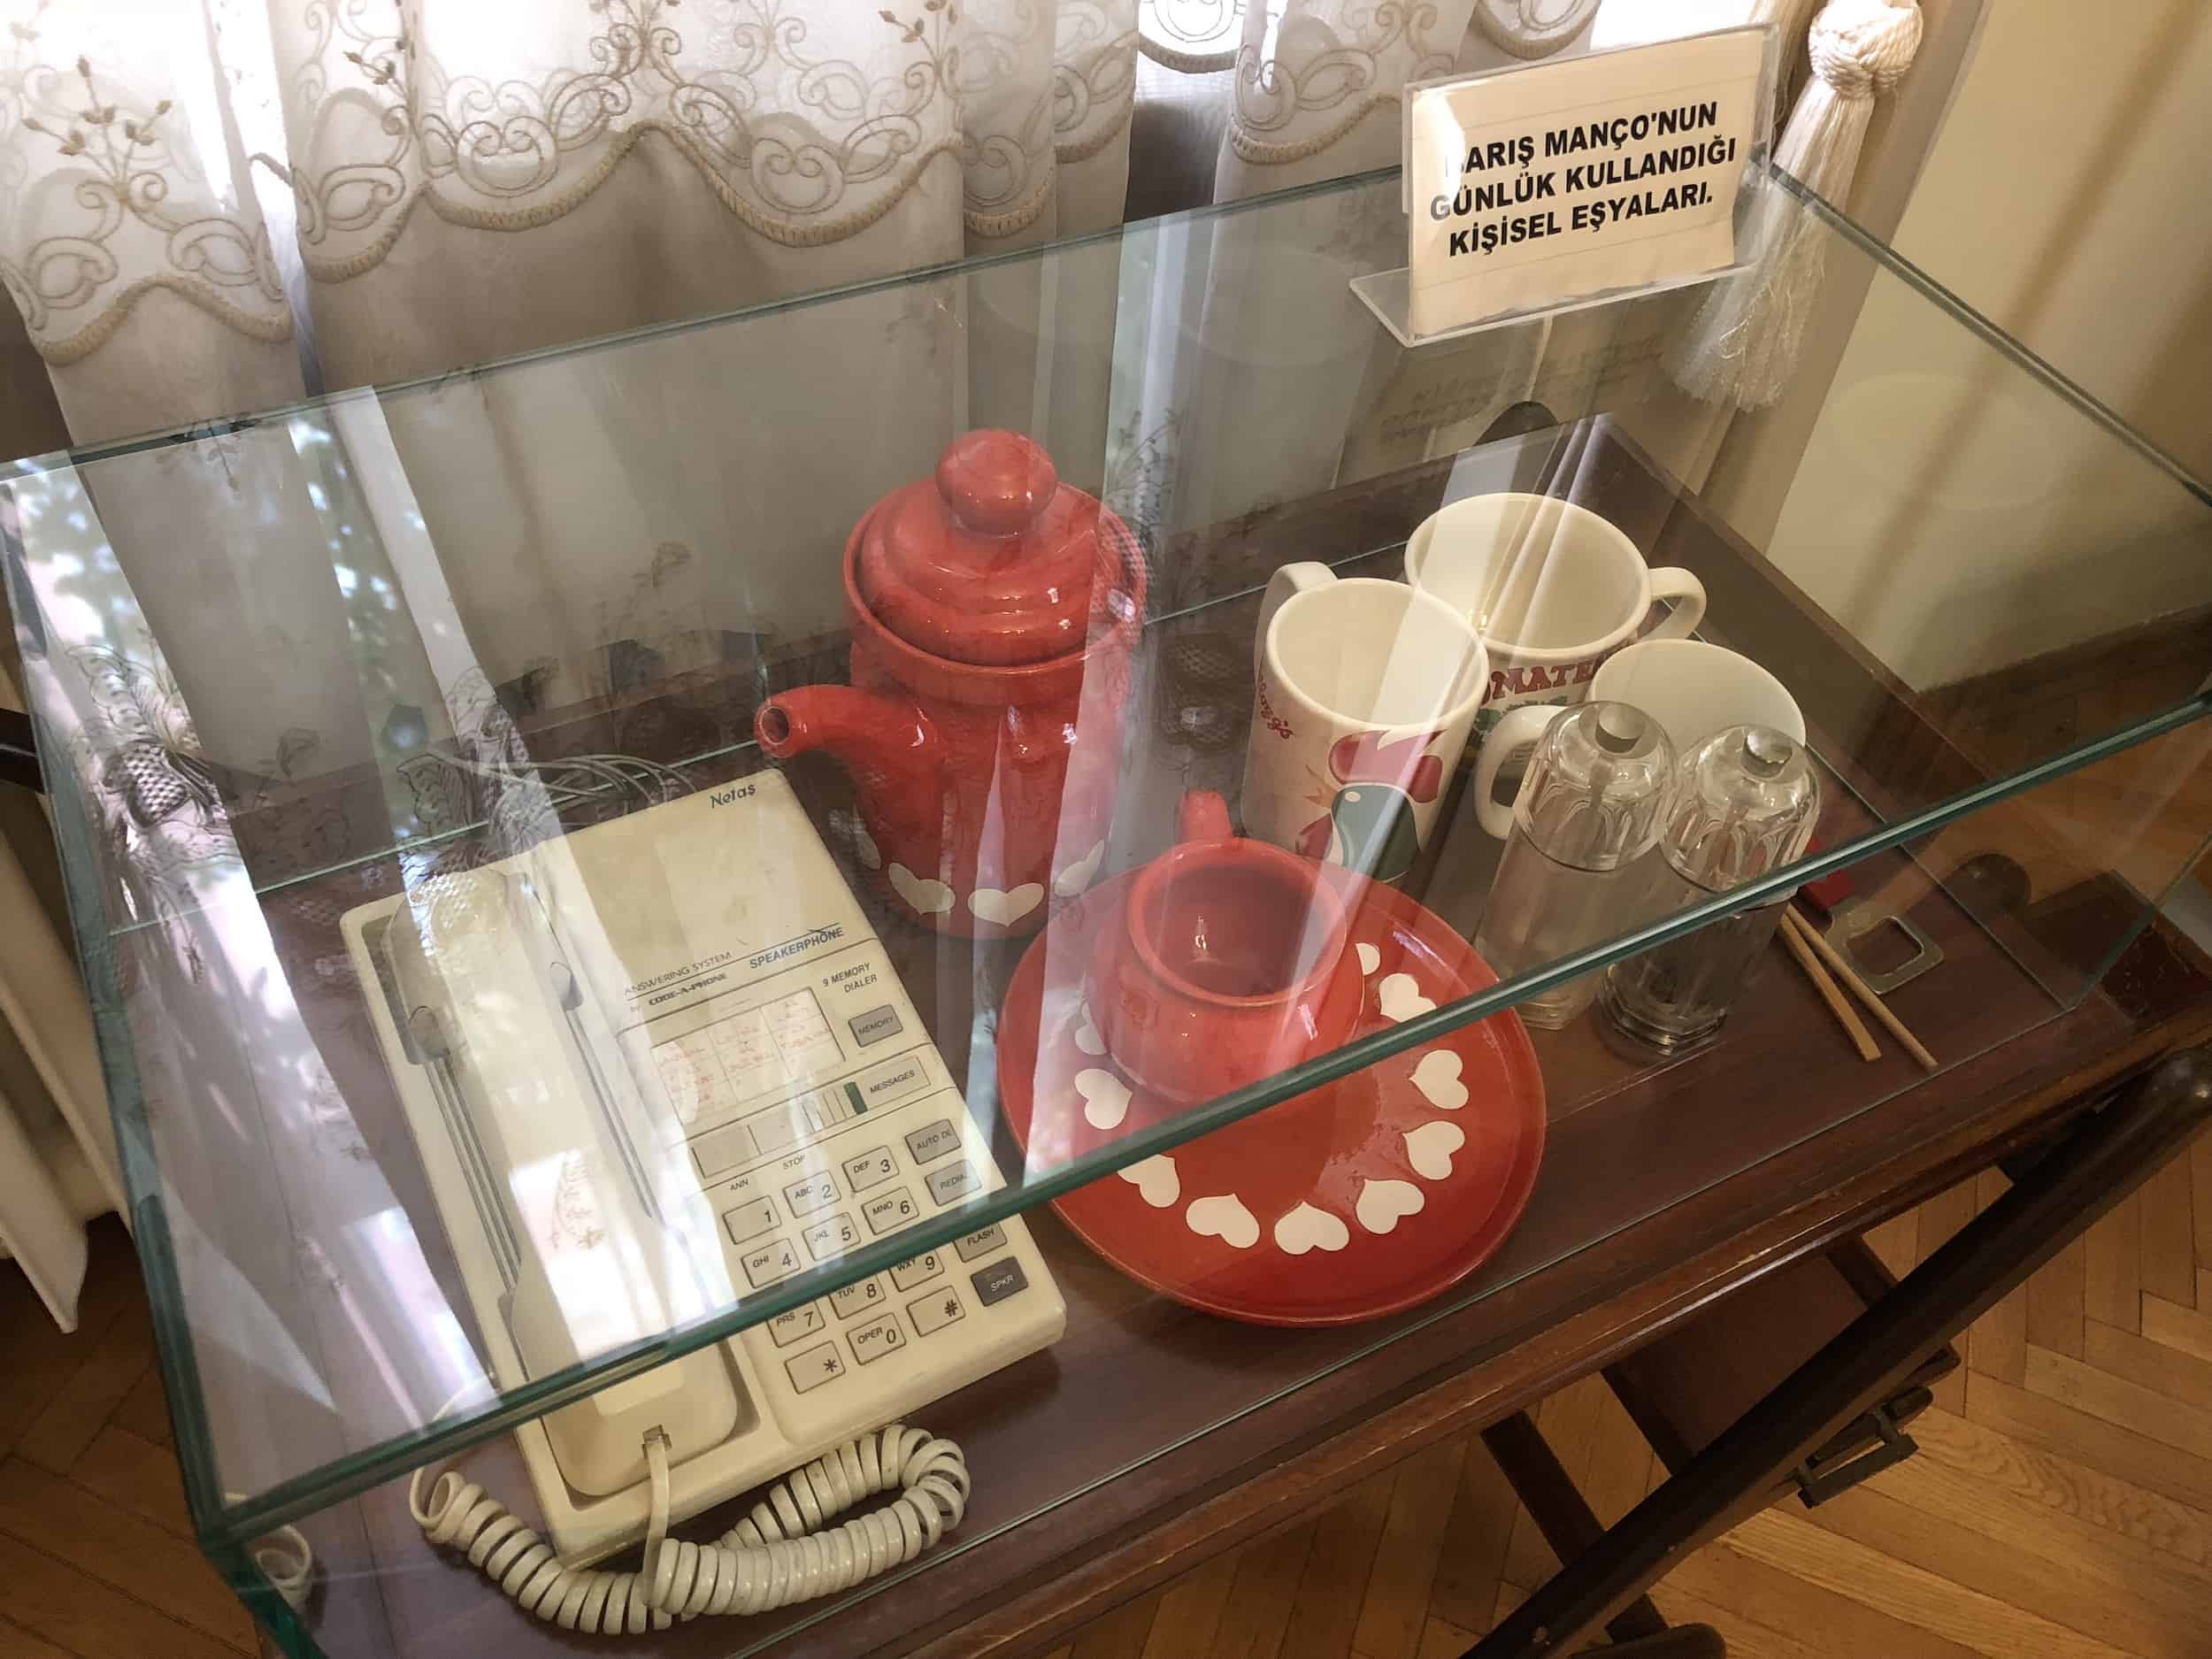 Personal items at the Barış Manço Museum in Istanbul, Turkey